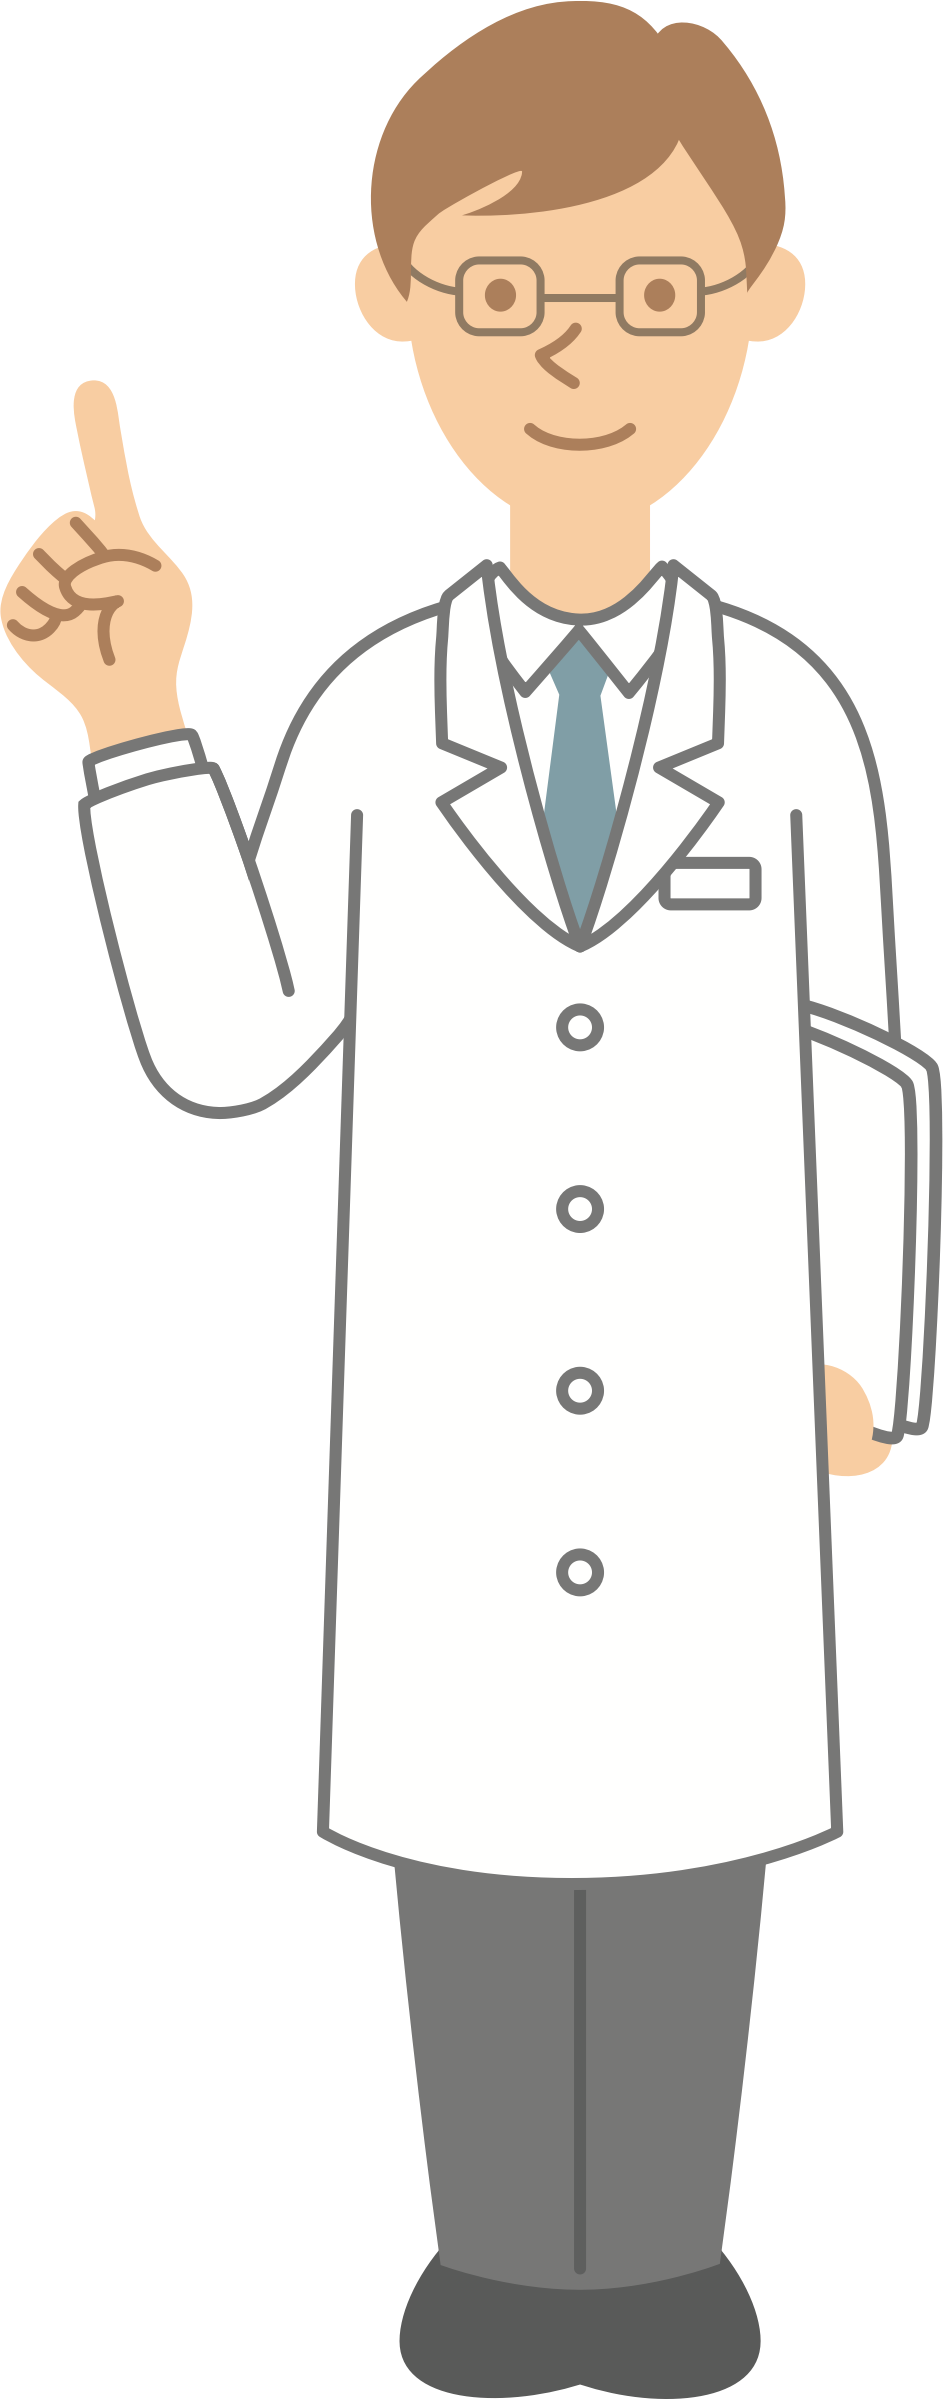 clipart doctor white coat